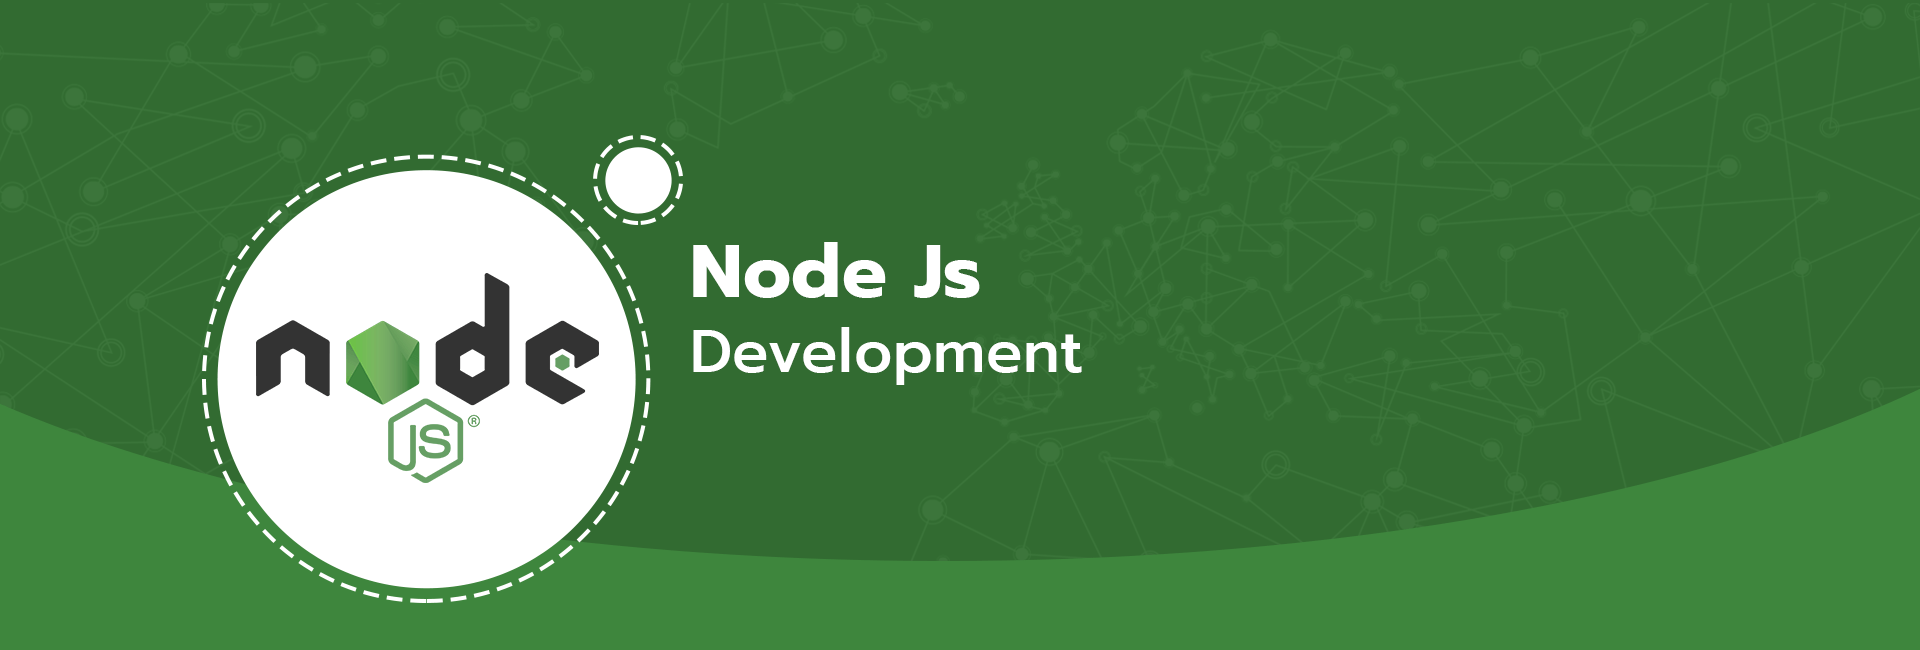 NodeJS Development Services UK